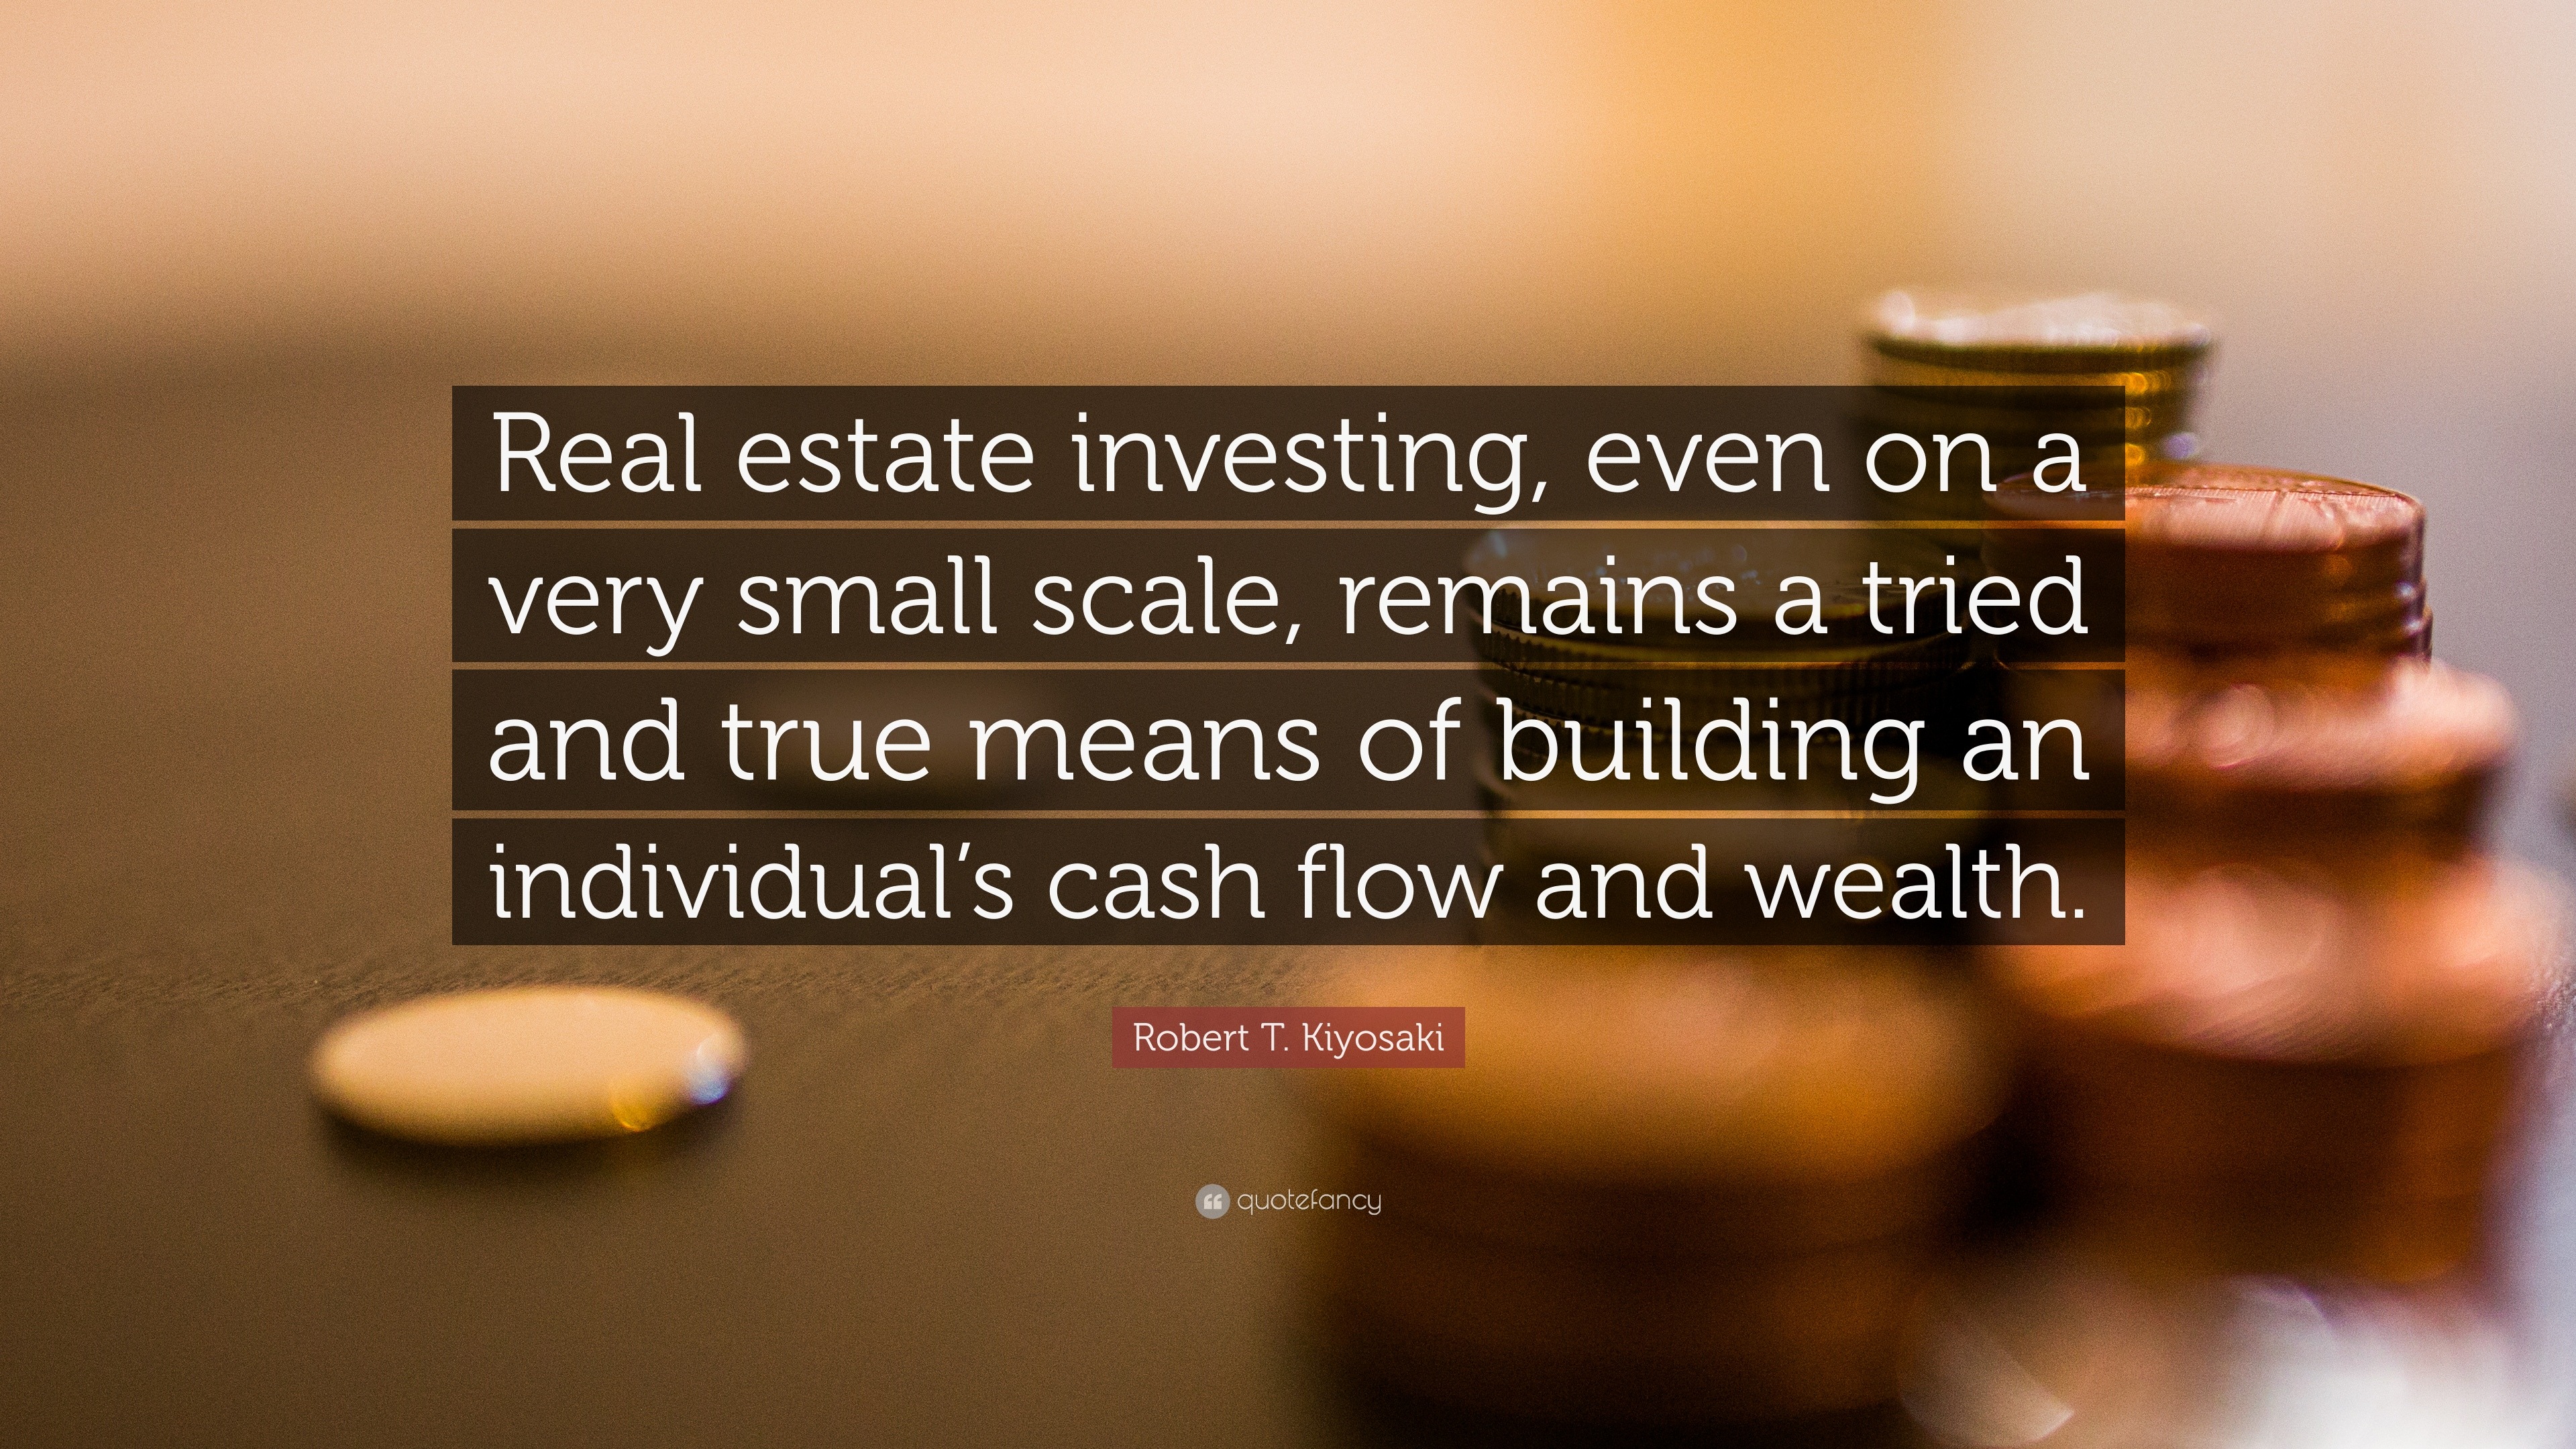 Robert T. Kiyosaki Quote “Real estate investing, even on